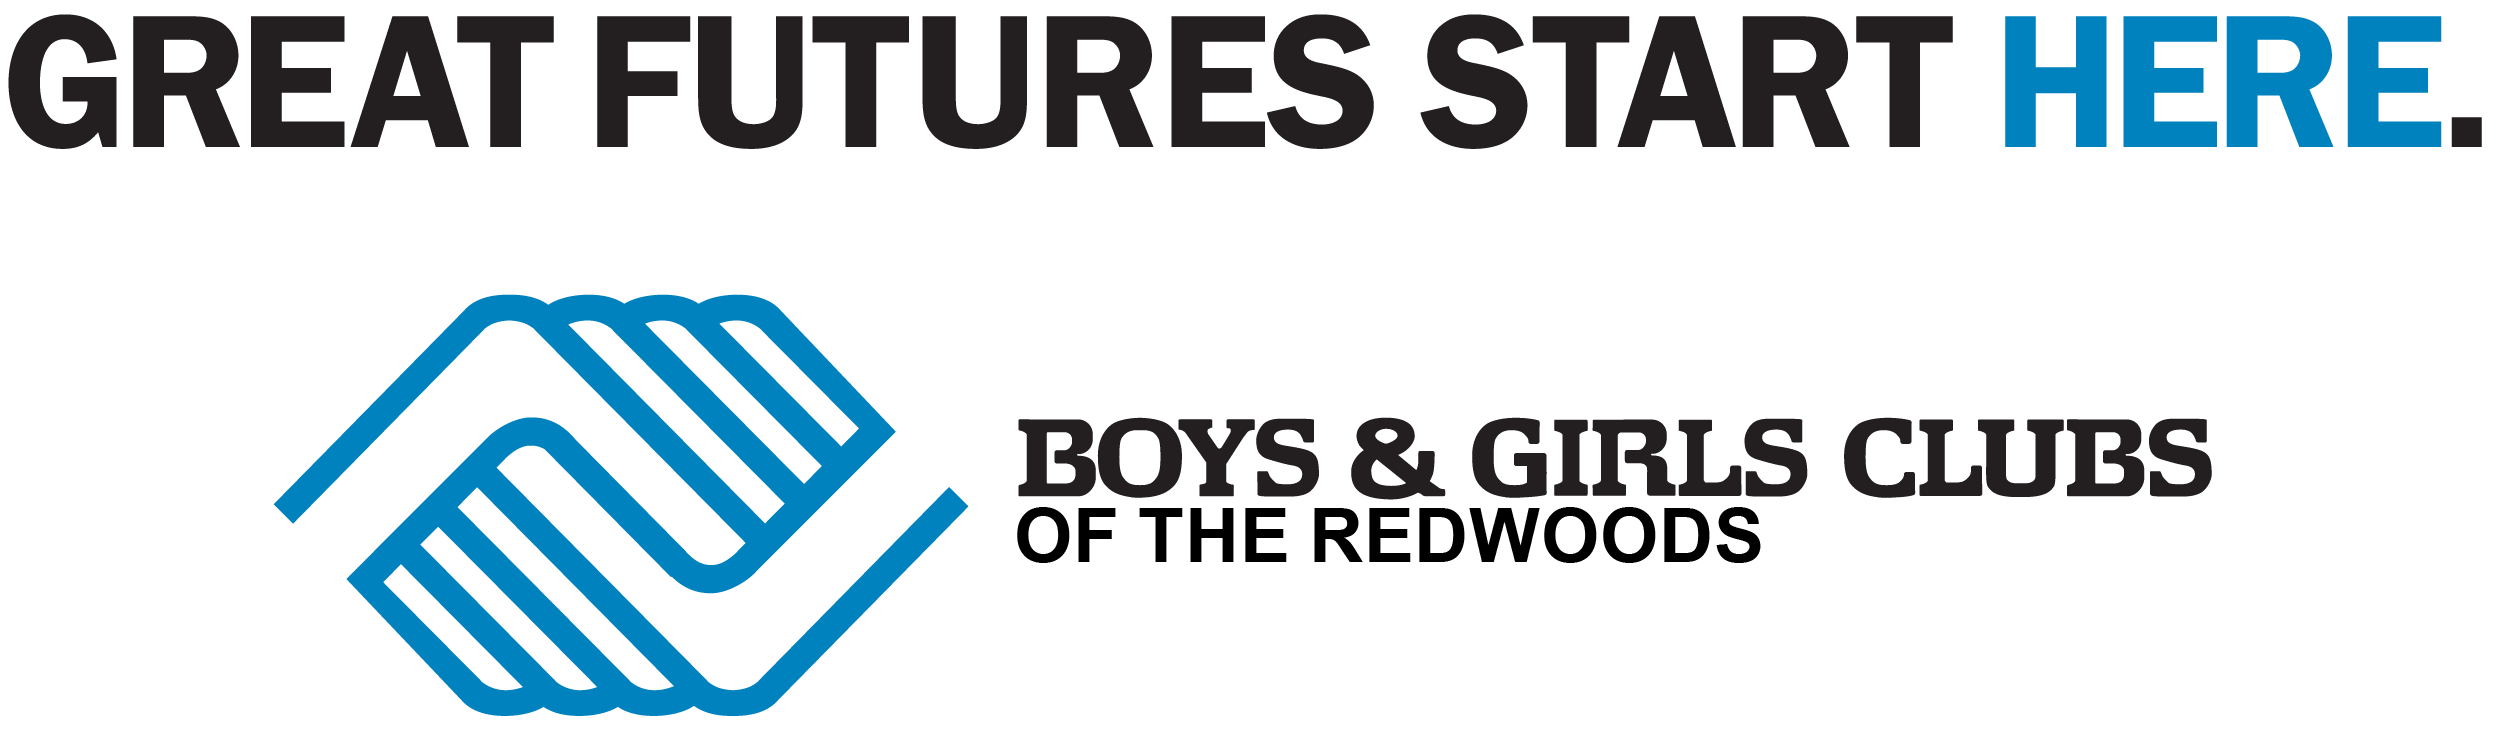 BGCR Logo Great Futures Start Here